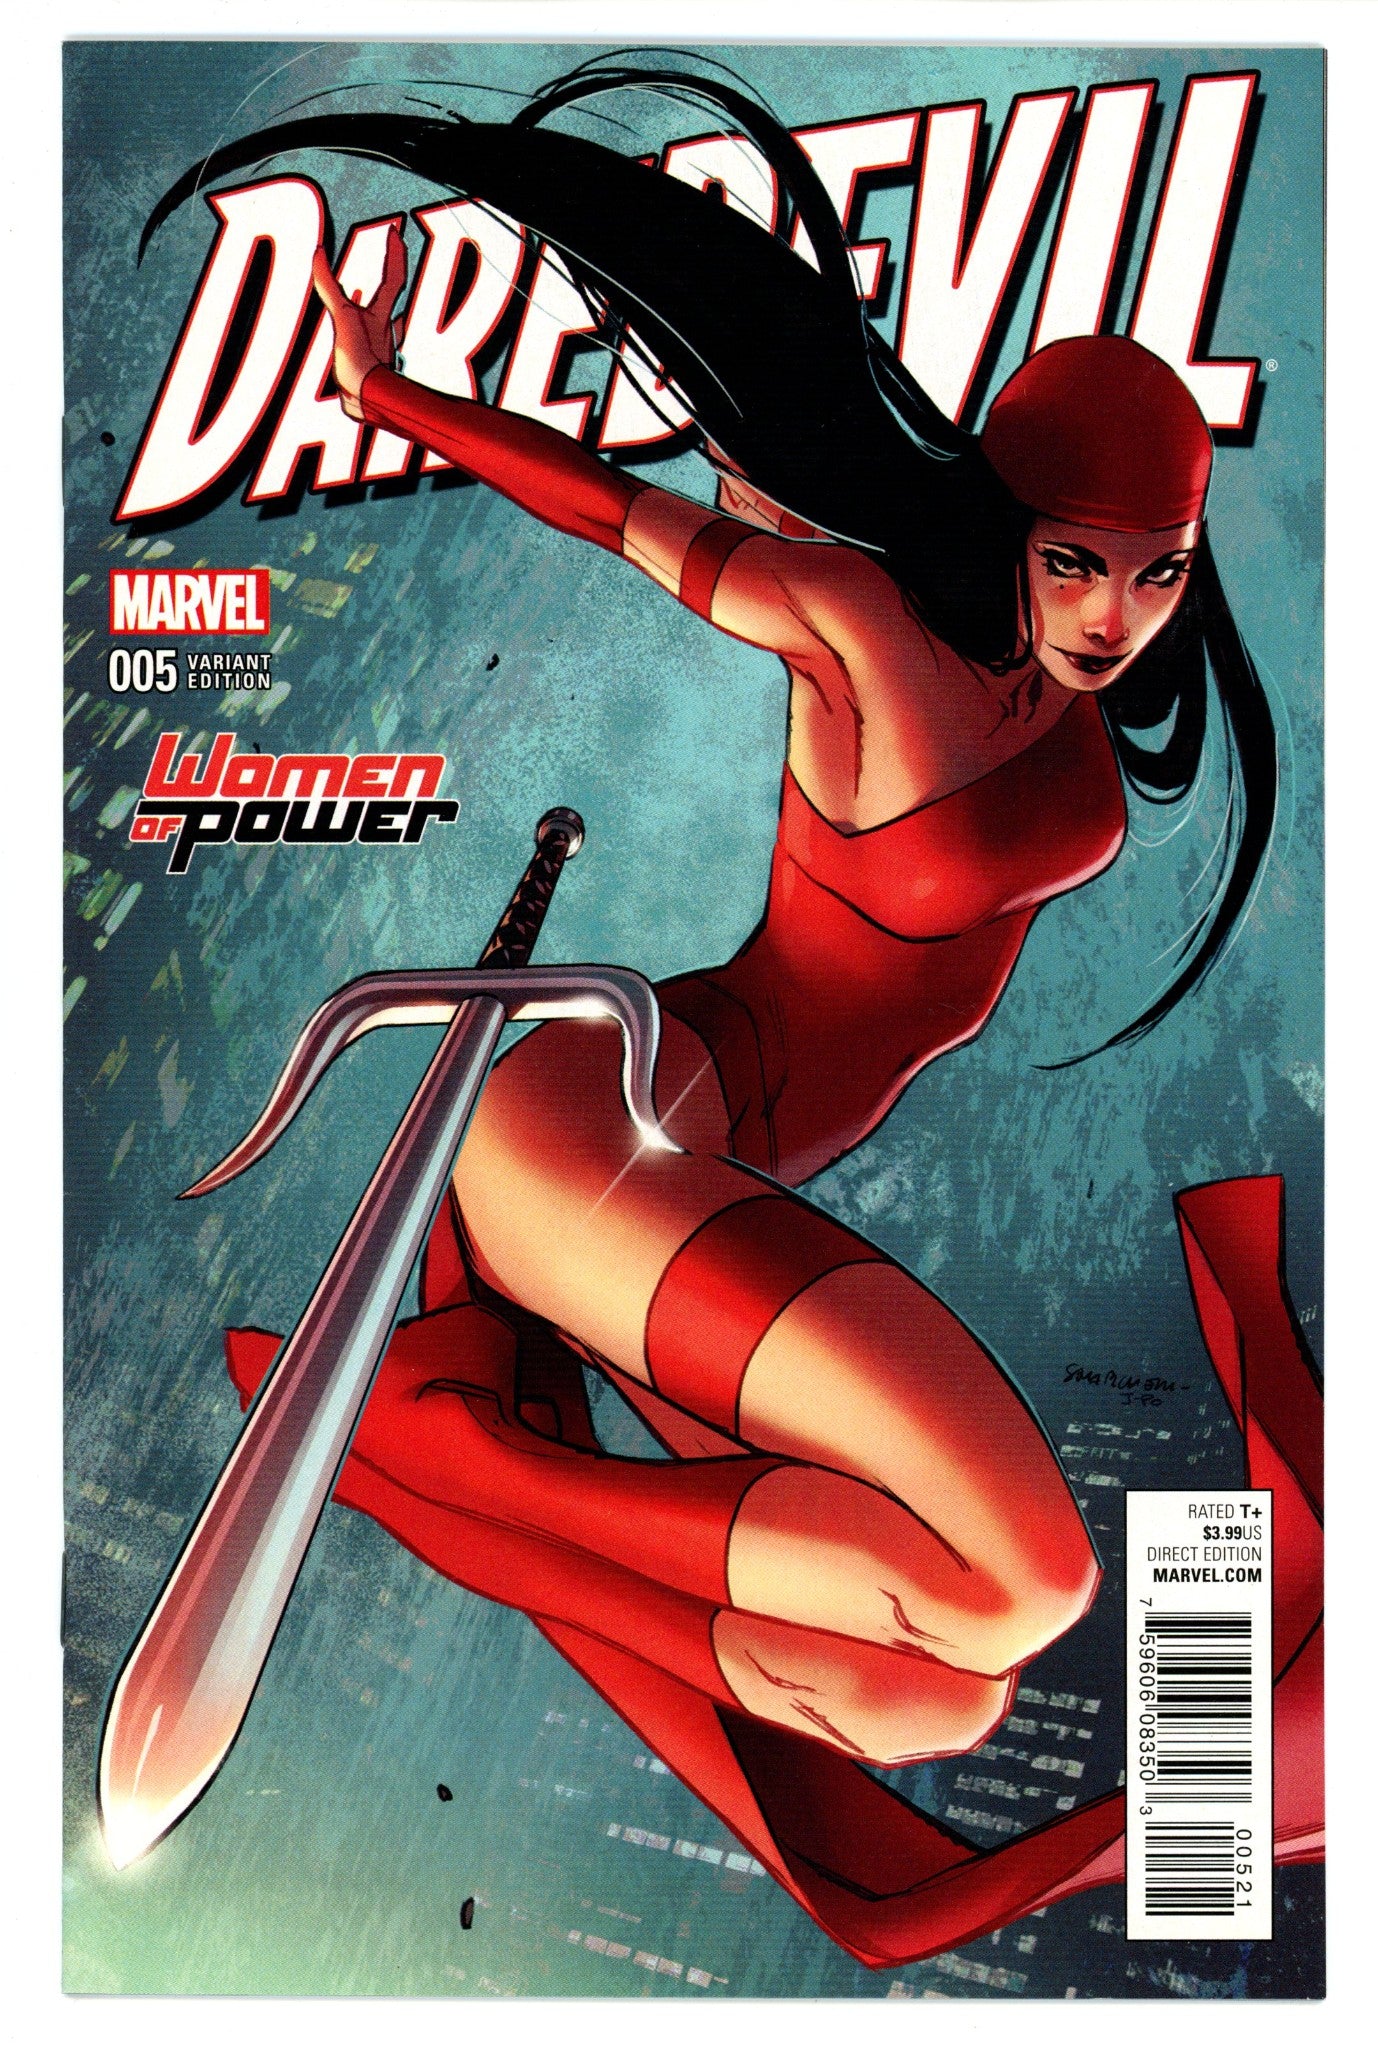 Daredevil Vol 5 5 VF/NM (9.0) (2016) Pichelli Variant 